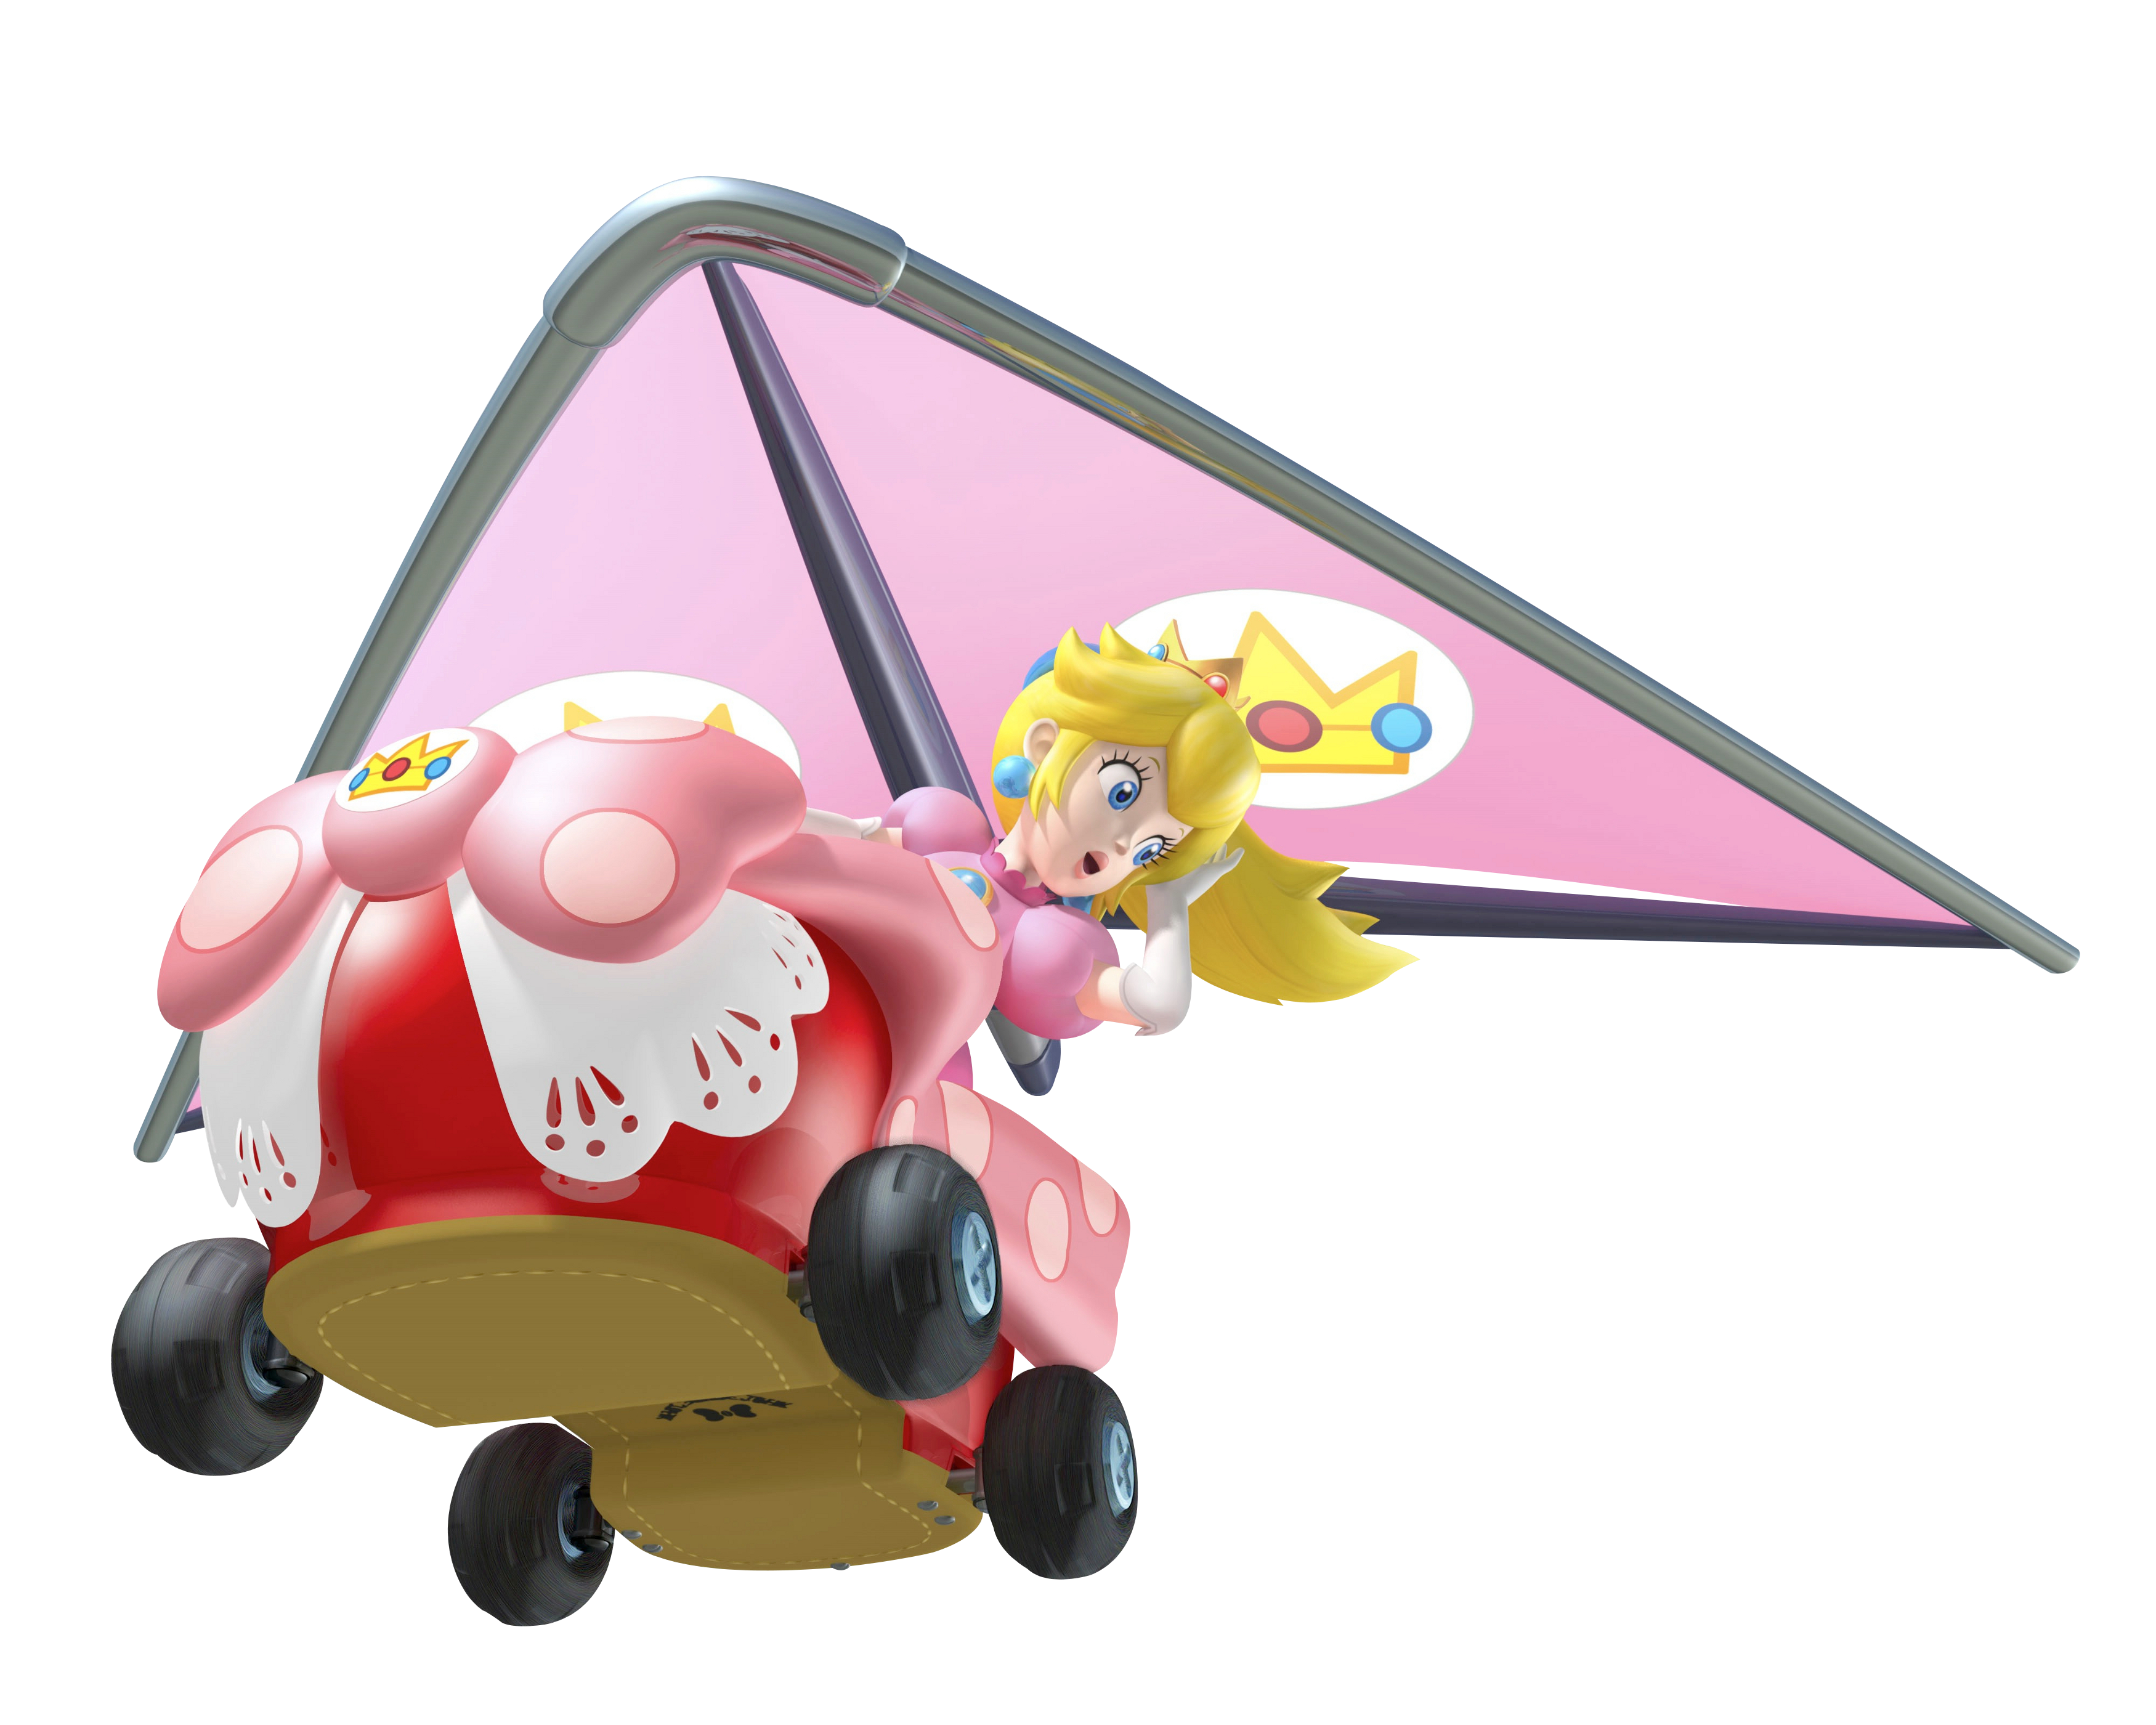 Image - Peach (Mario Kart 7).png - Nintendo 3DS Wiki